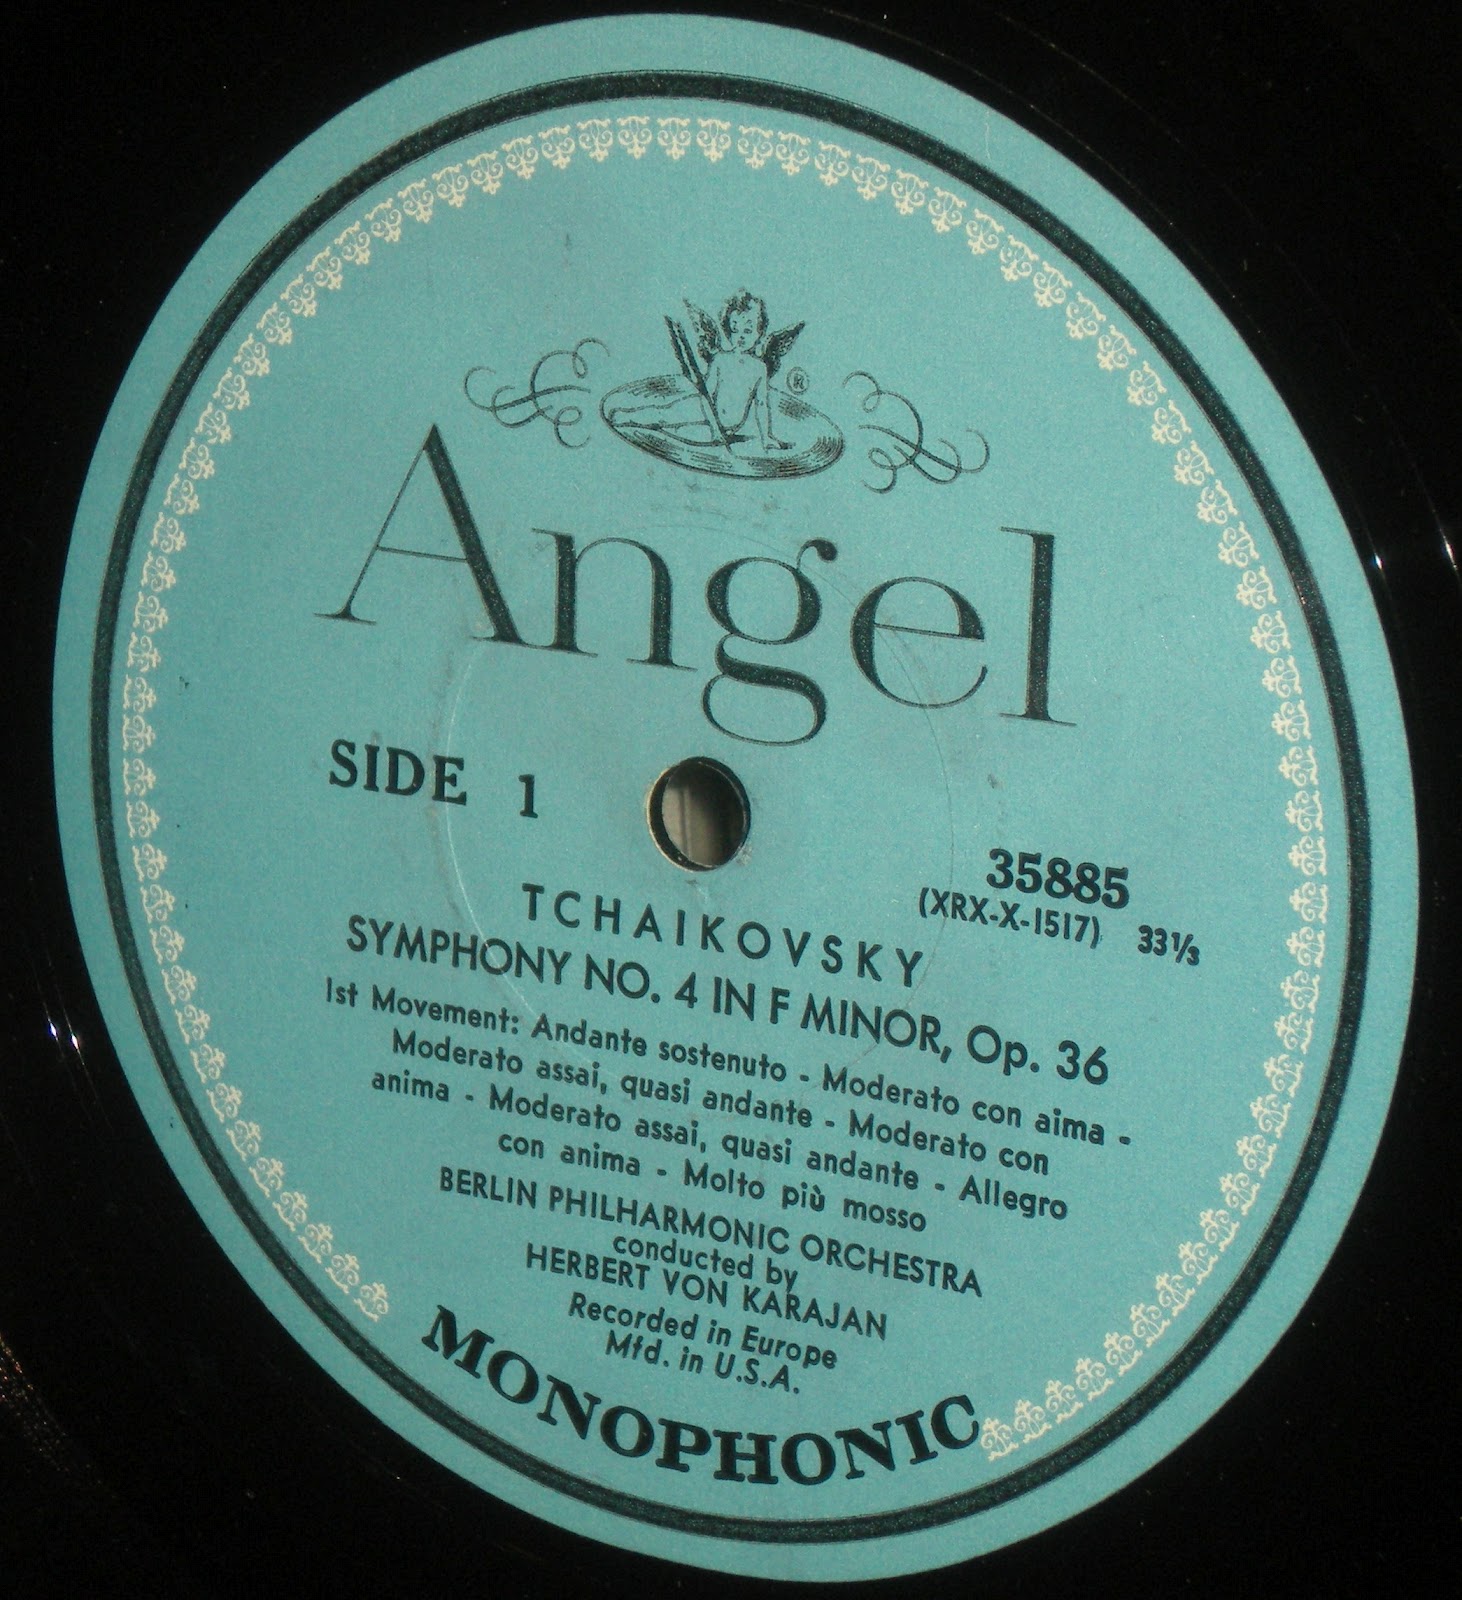 Recording angel - Wikipedia